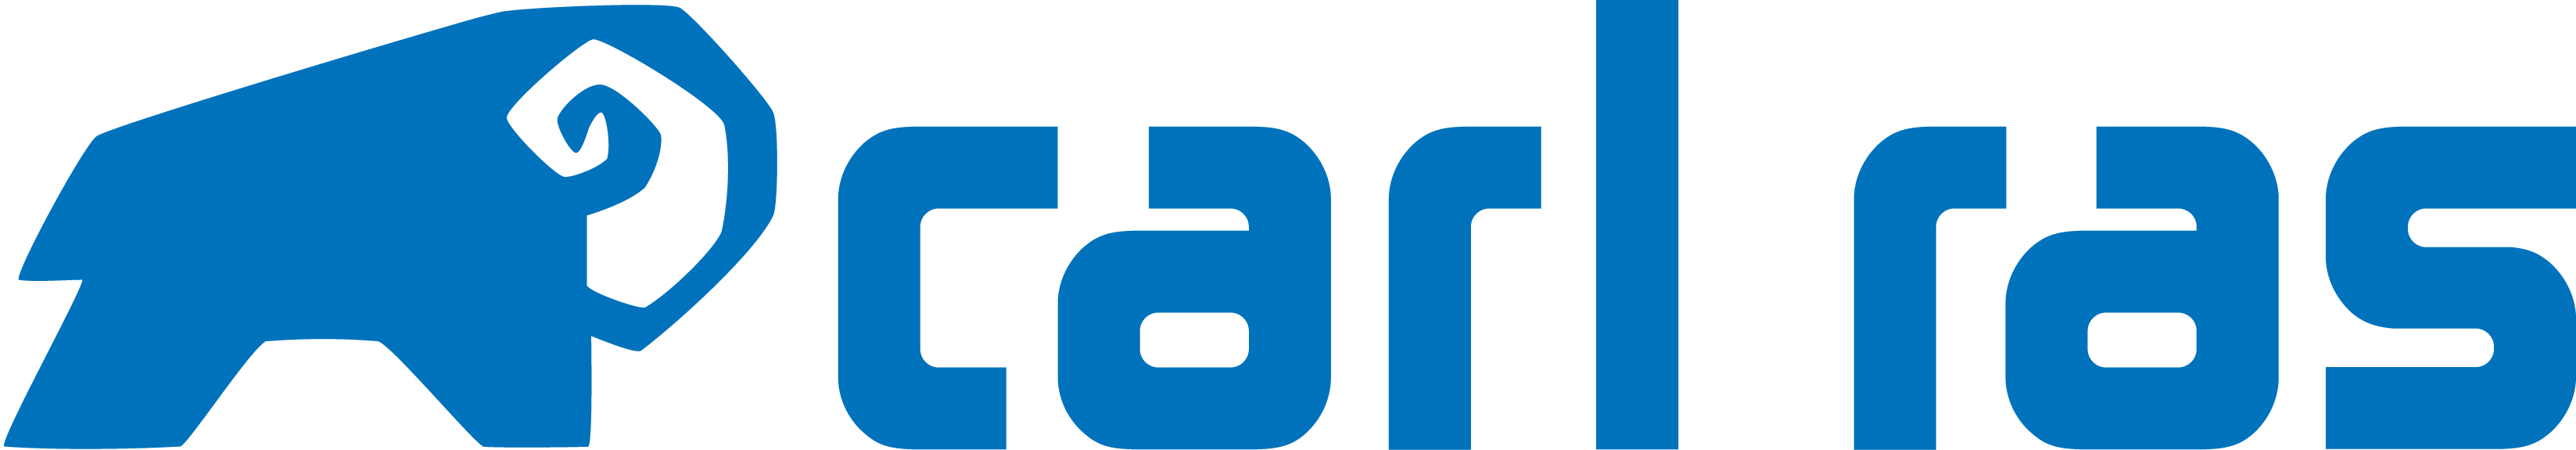 Carl Ras logo